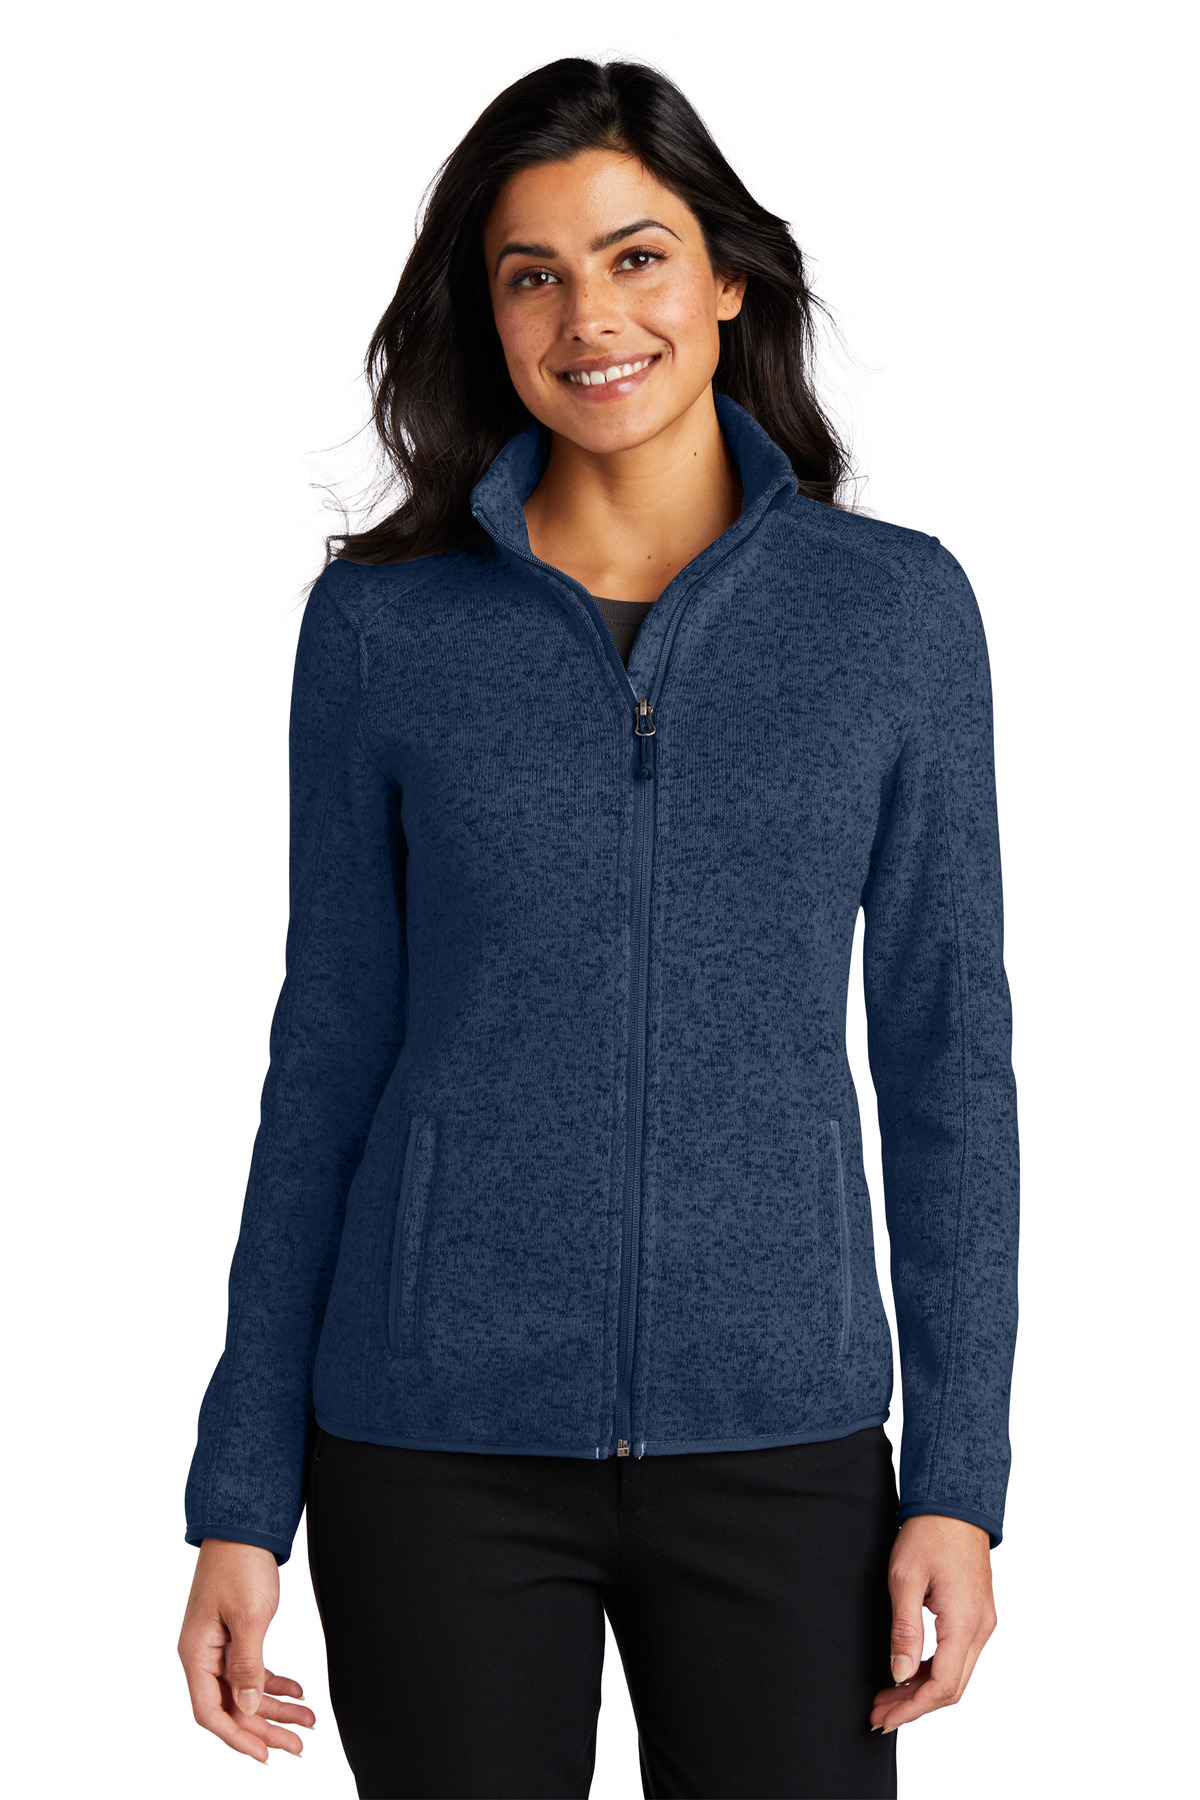 Port Authority L232 Ladies Sweater Fleece Jacket | Jiffy Shirts